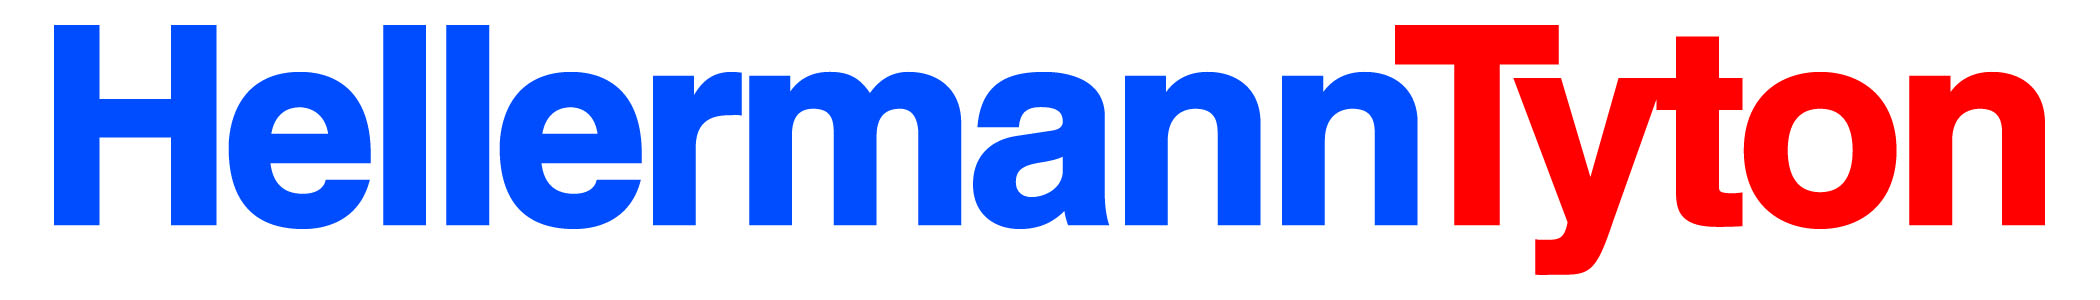 HellermannTyton_logo